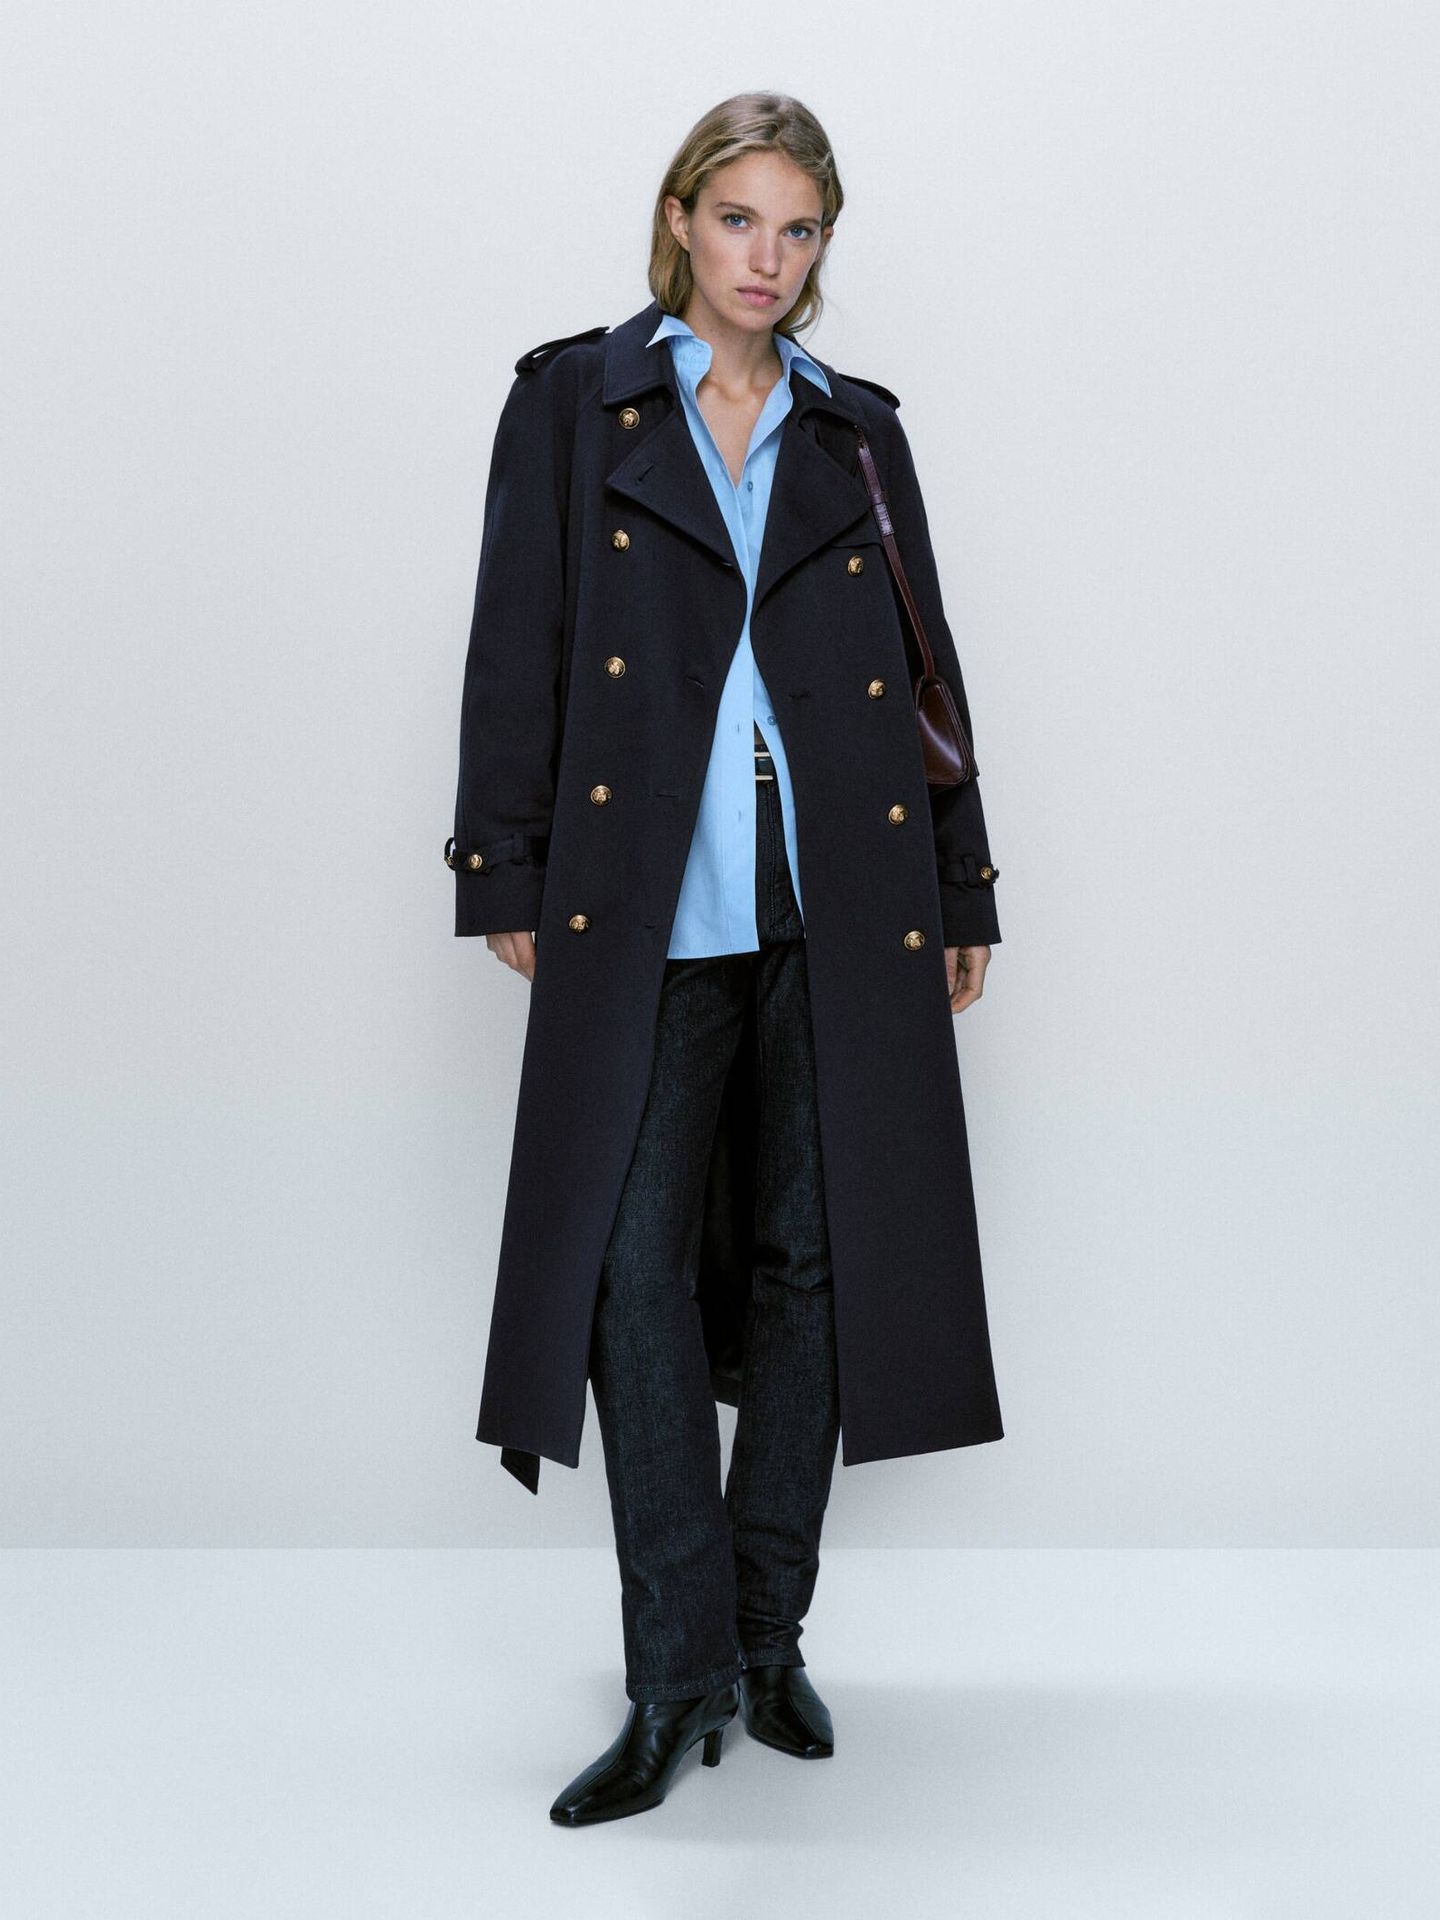 Massimo Dutti tiene el abrigo que triunfará este invierno. (Cortesía/Massimo Dutti)